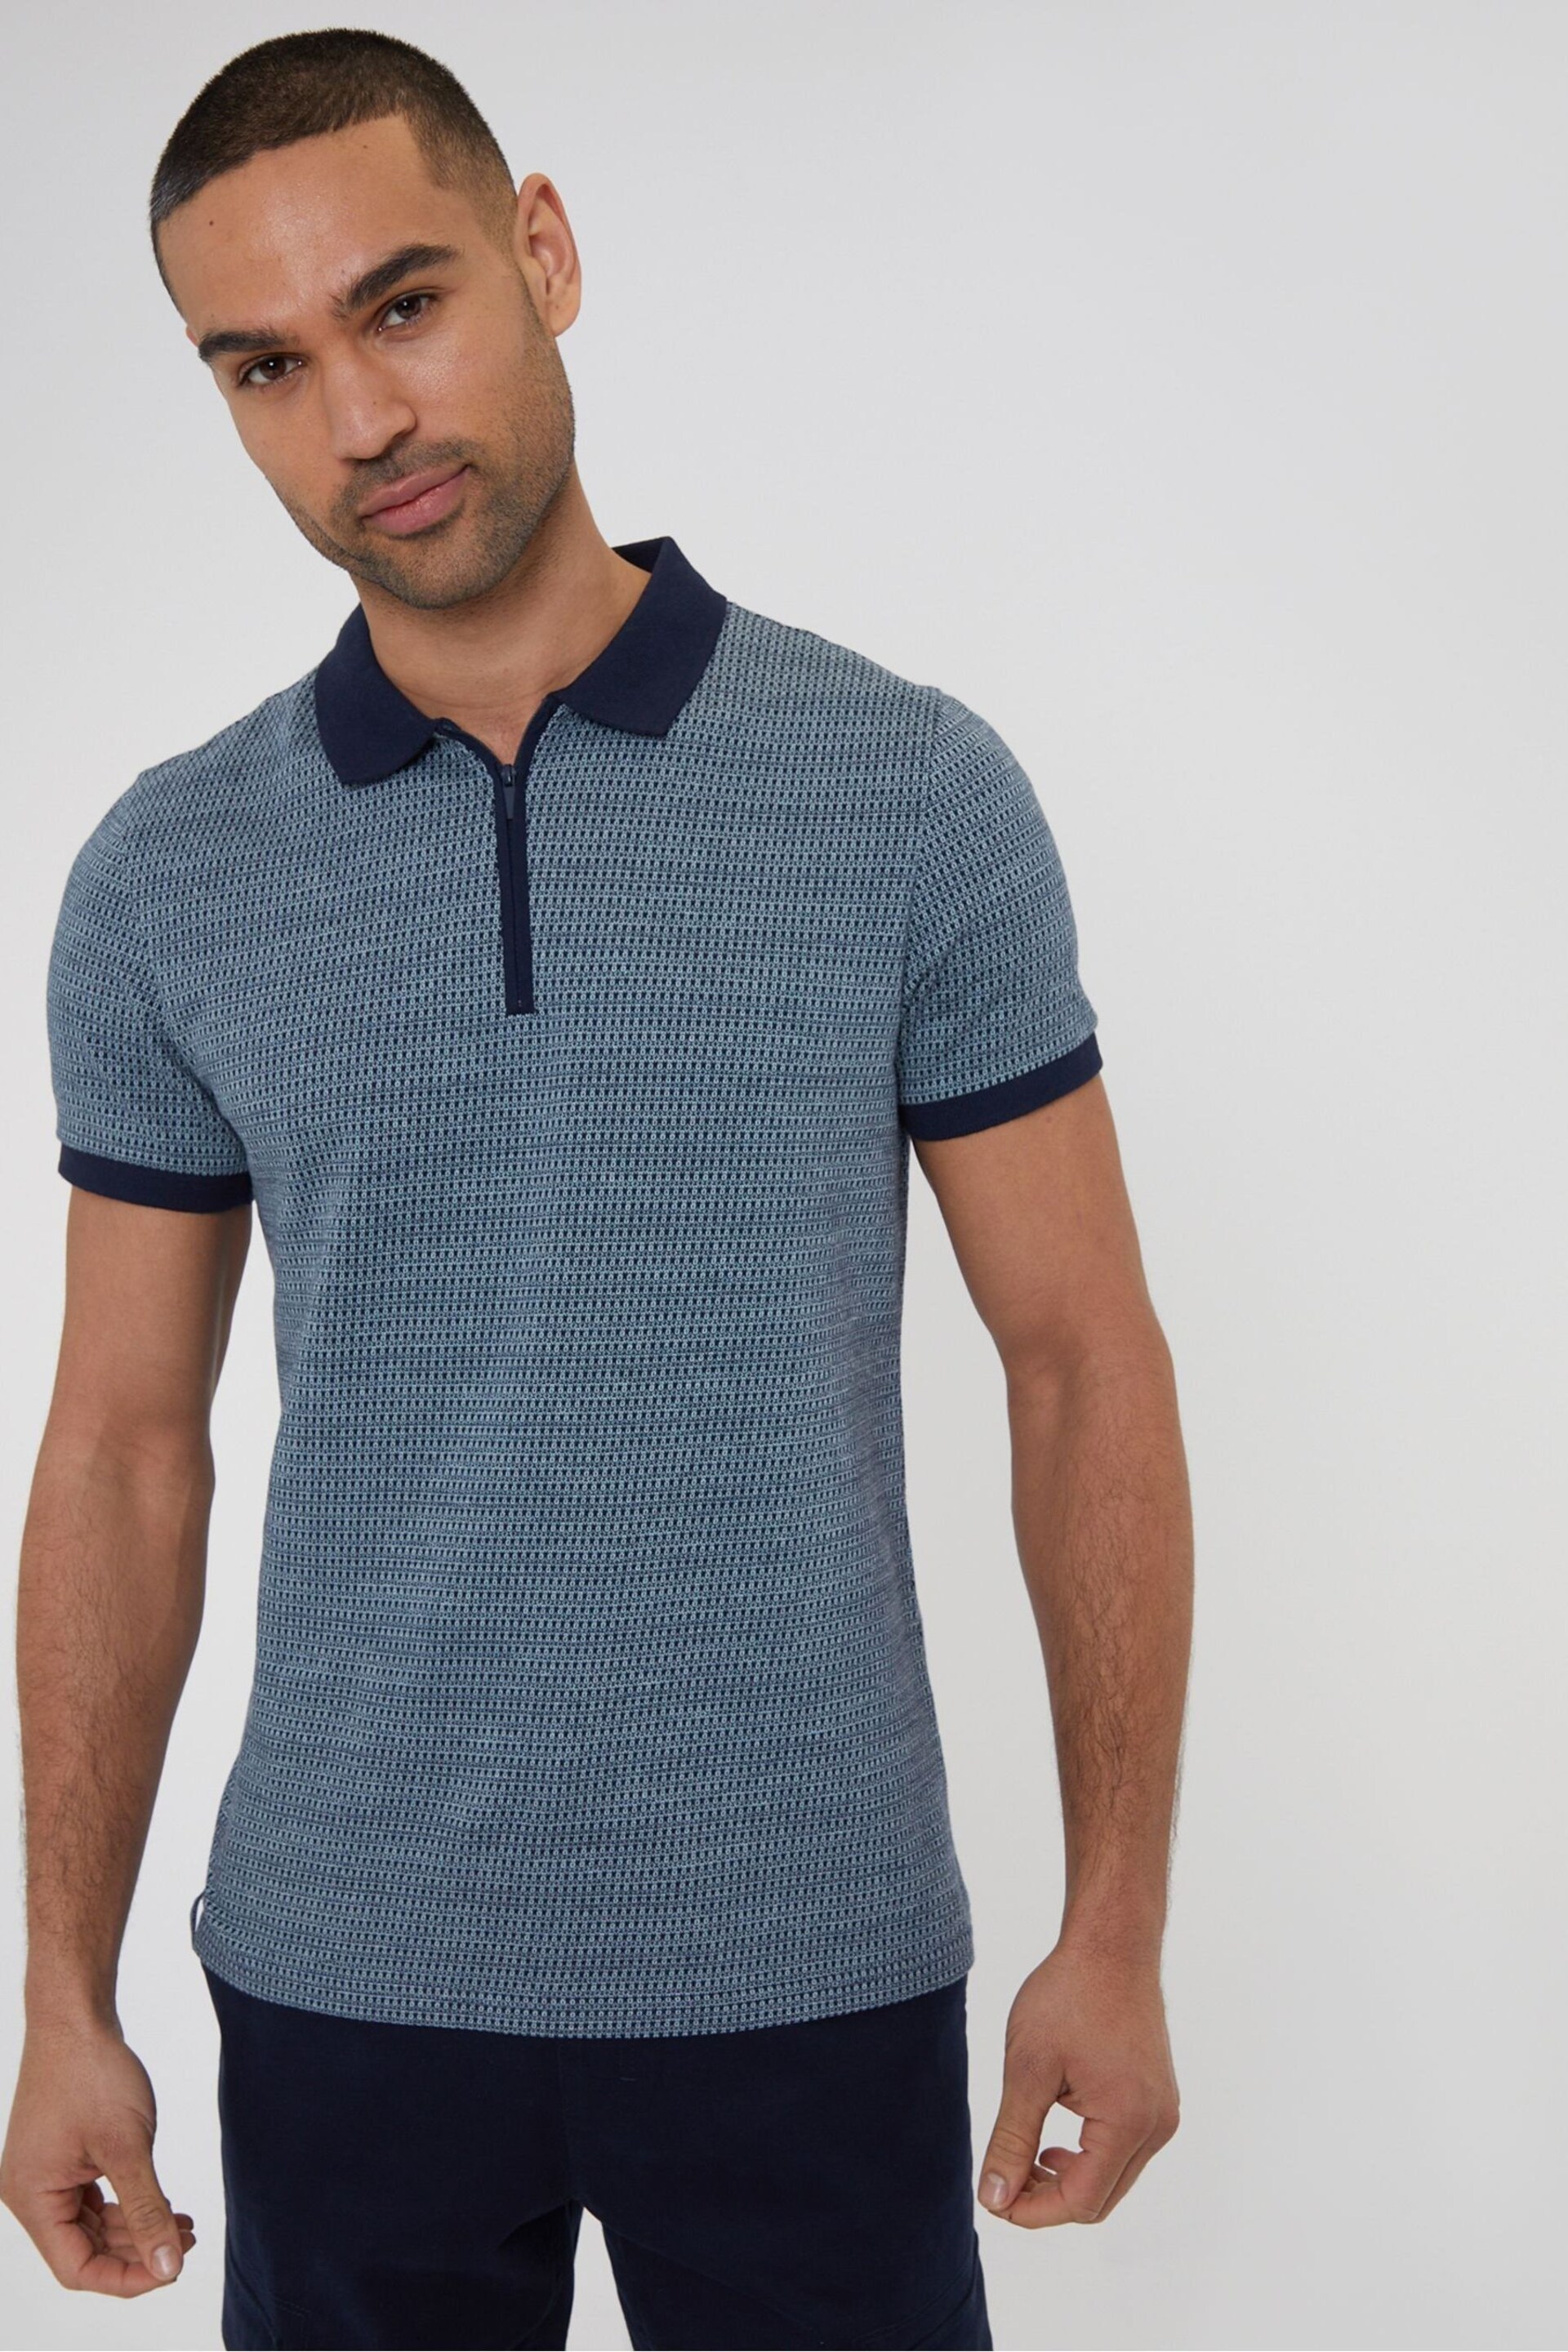 Threadbare Blue Geometric Print Zip Collar Cotton Jersey Polo Shirt - Image 1 of 4